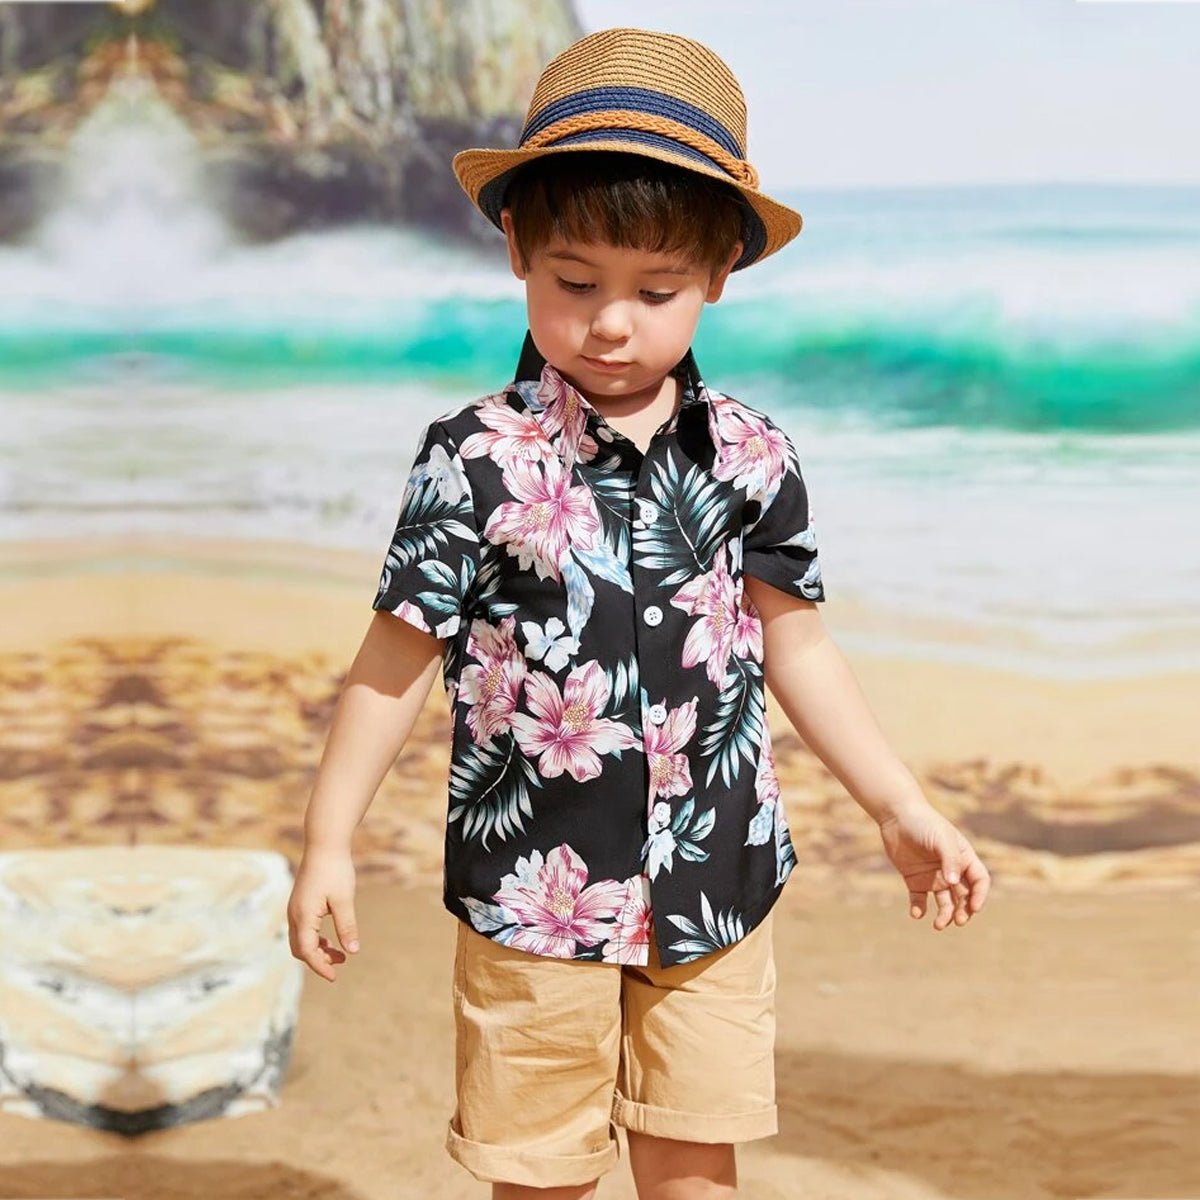 Venutaloza Boys Stylish Tropical Print Shirt For Boy.